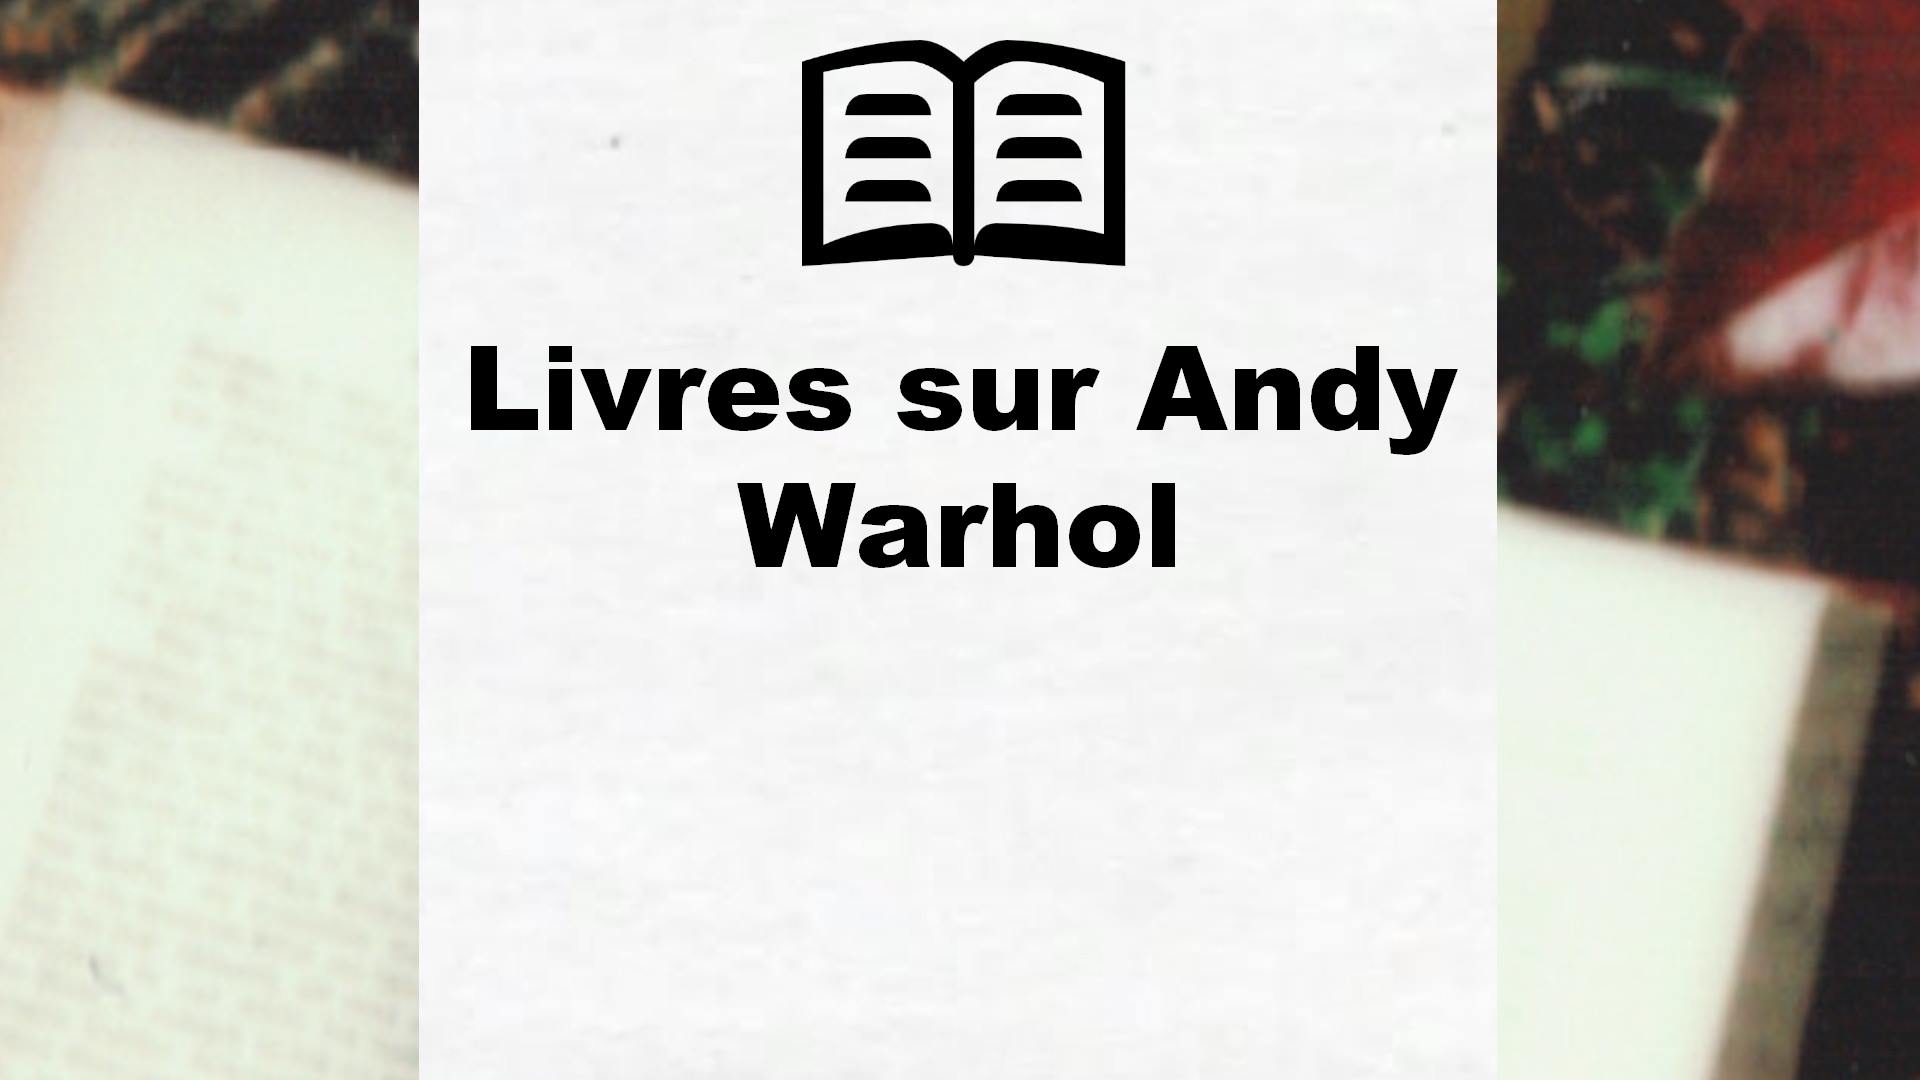 Livres sur Andy Warhol